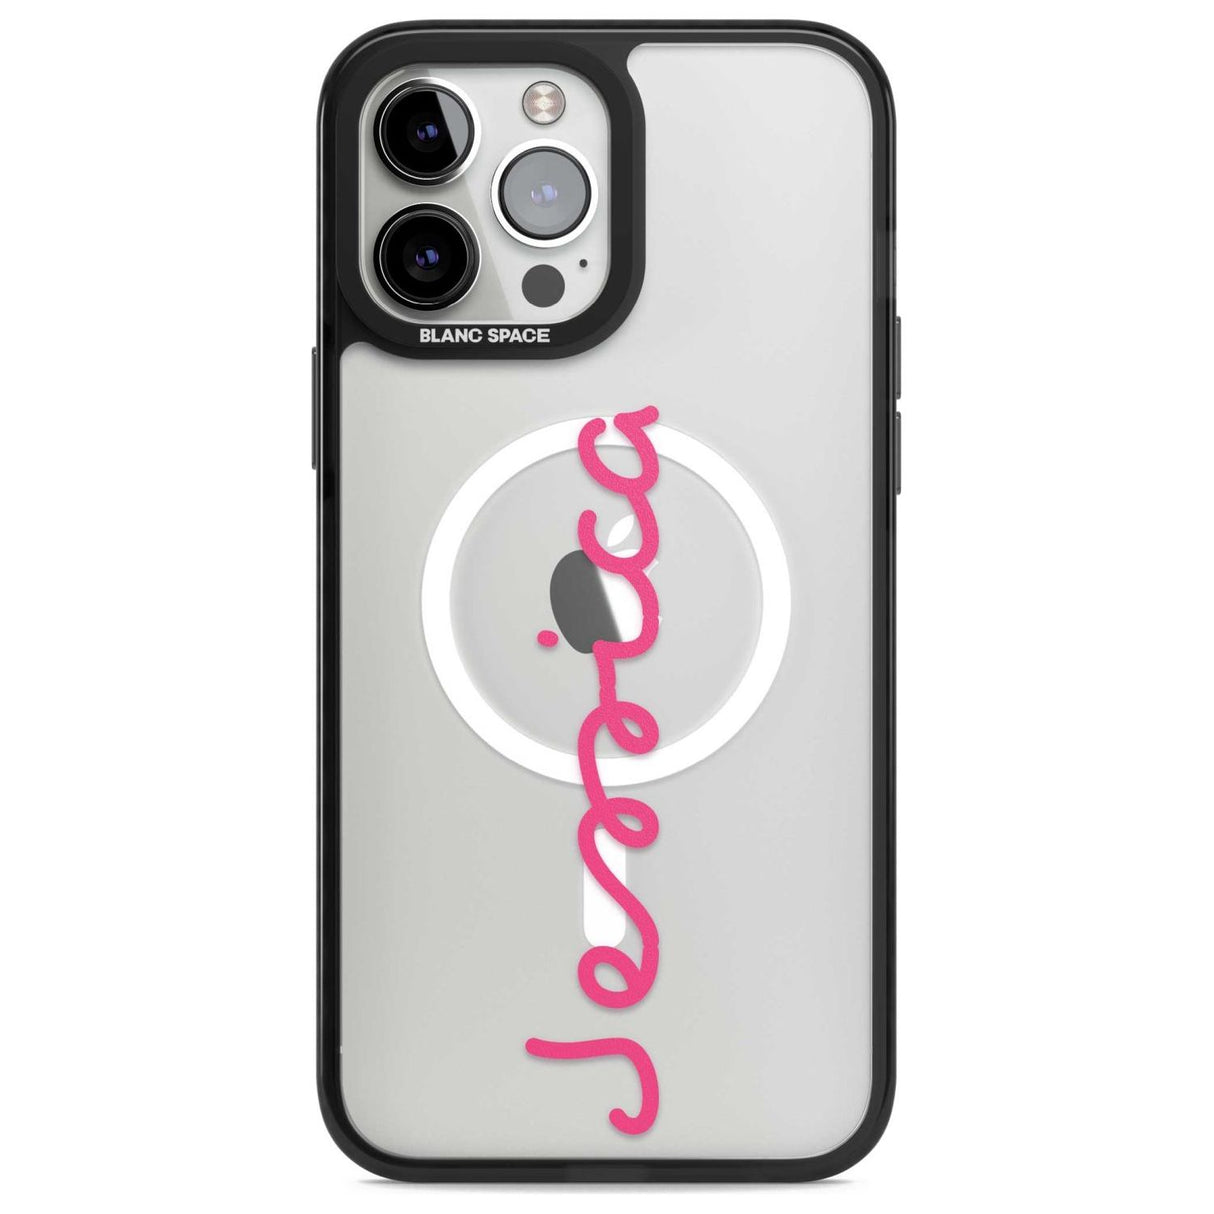 Personalised Summer Name Custom Phone Case iPhone 13 Pro Max / Magsafe Black Impact Case Blanc Space